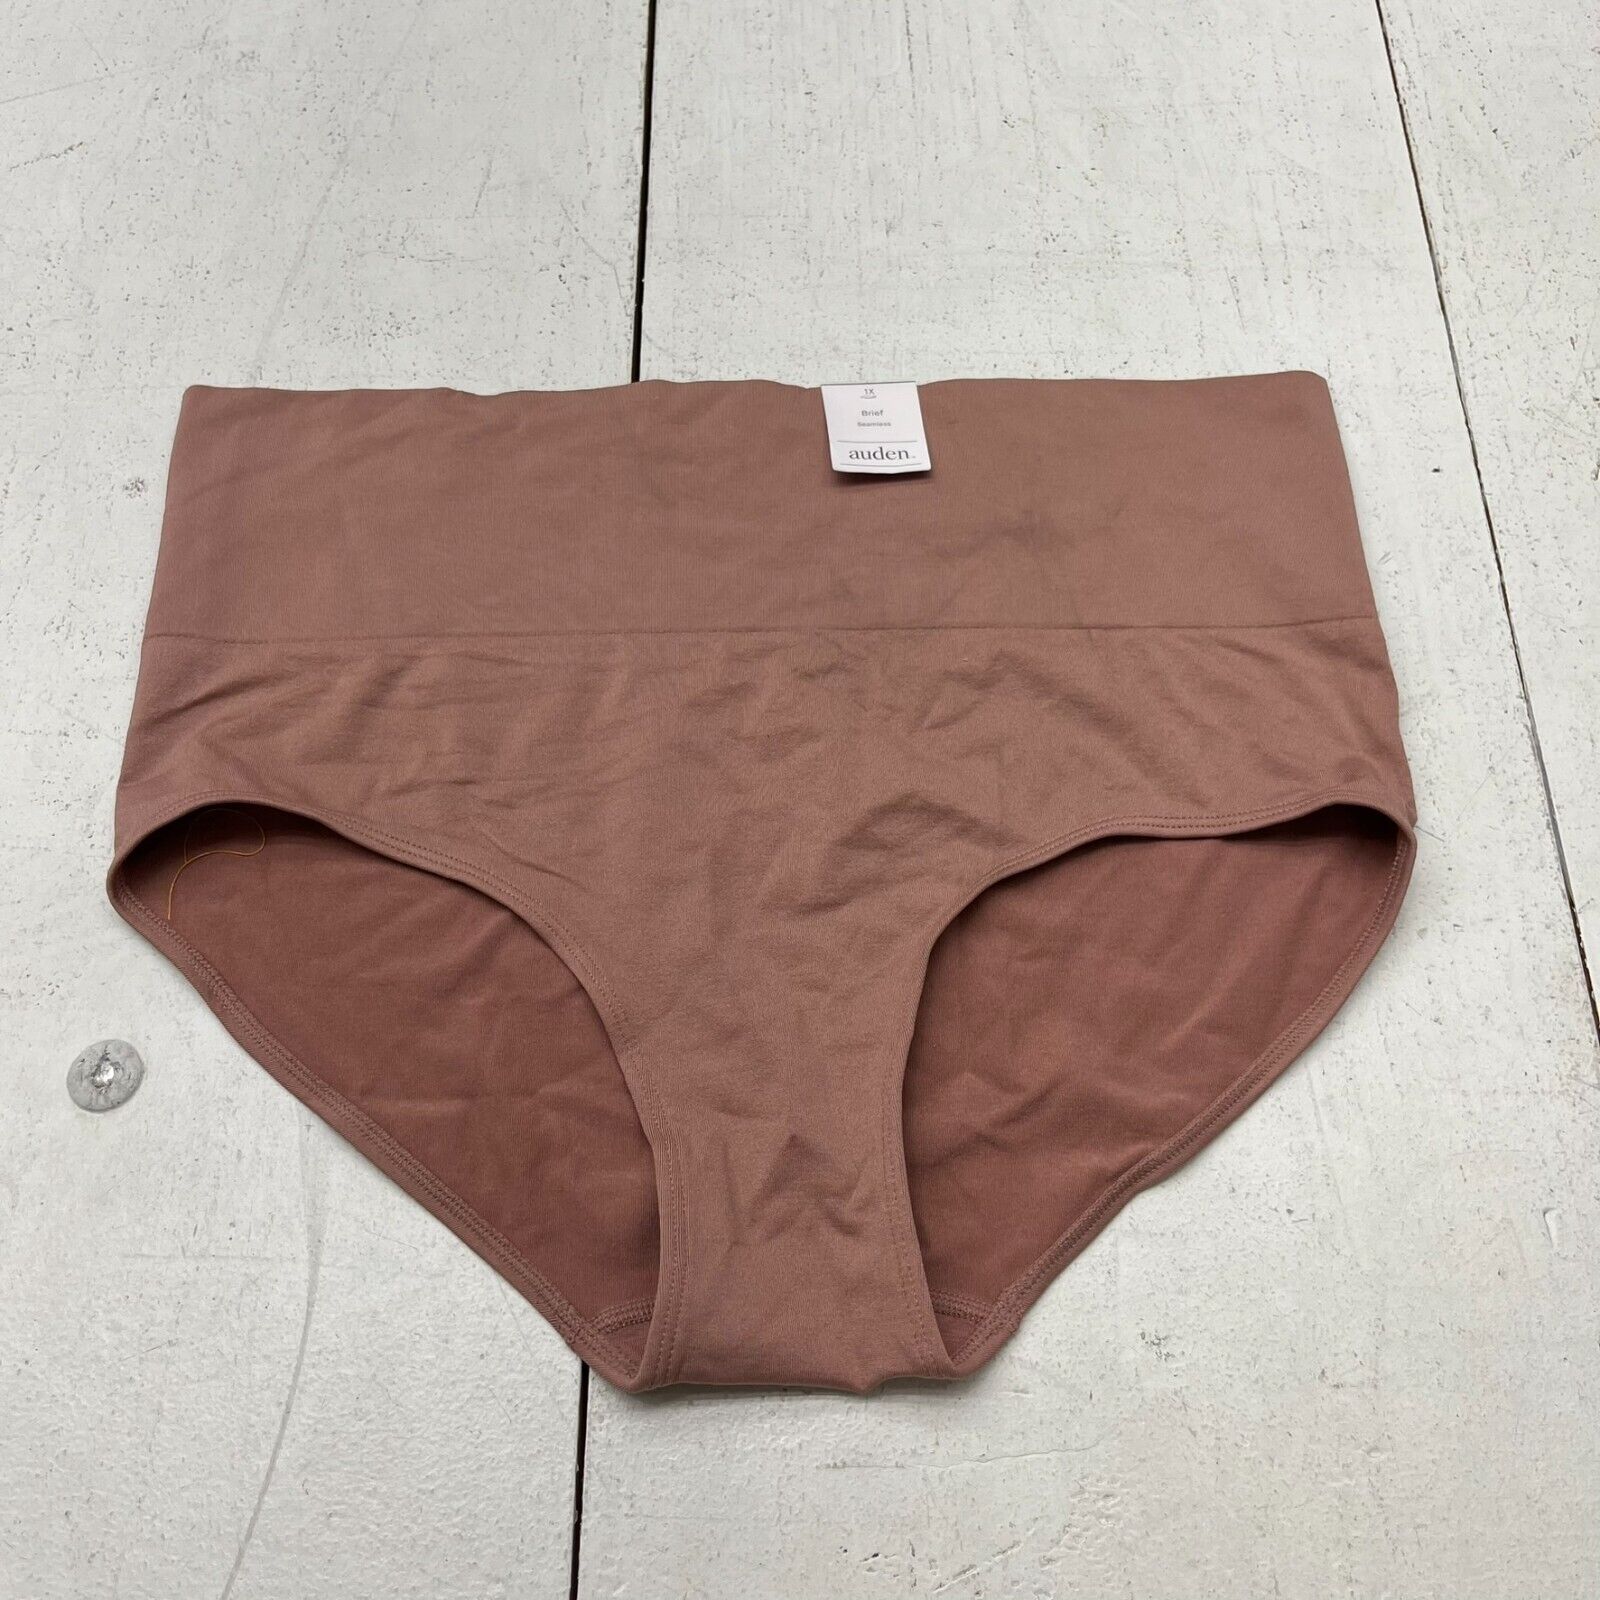 Auden Black Seamless Hipster Underwear Women's Size Large NEW